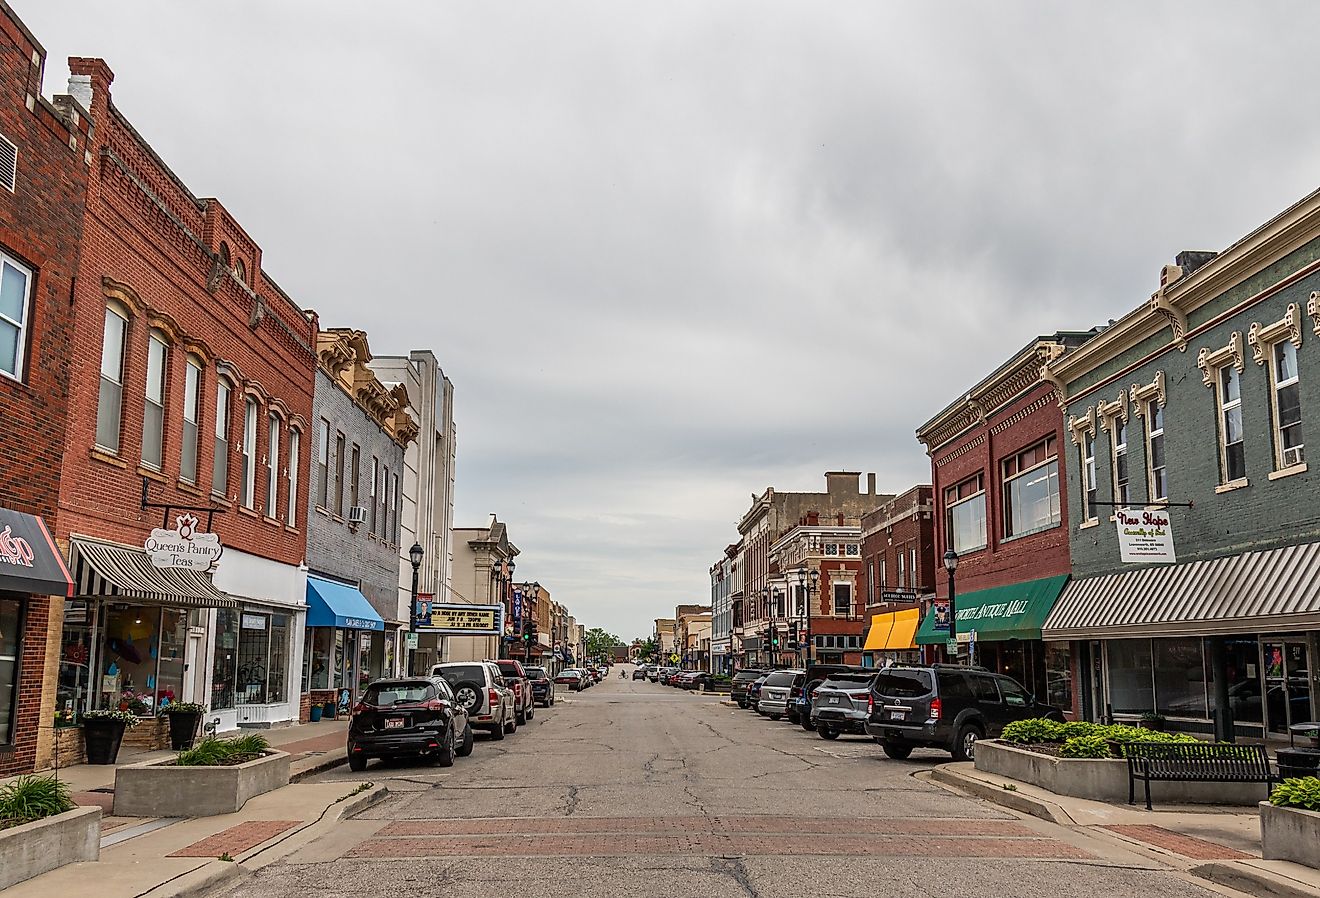 Historic downtown shopping district in Leavenworth, Kansas. Image credit Jon M. Ripperger via Shutterstock